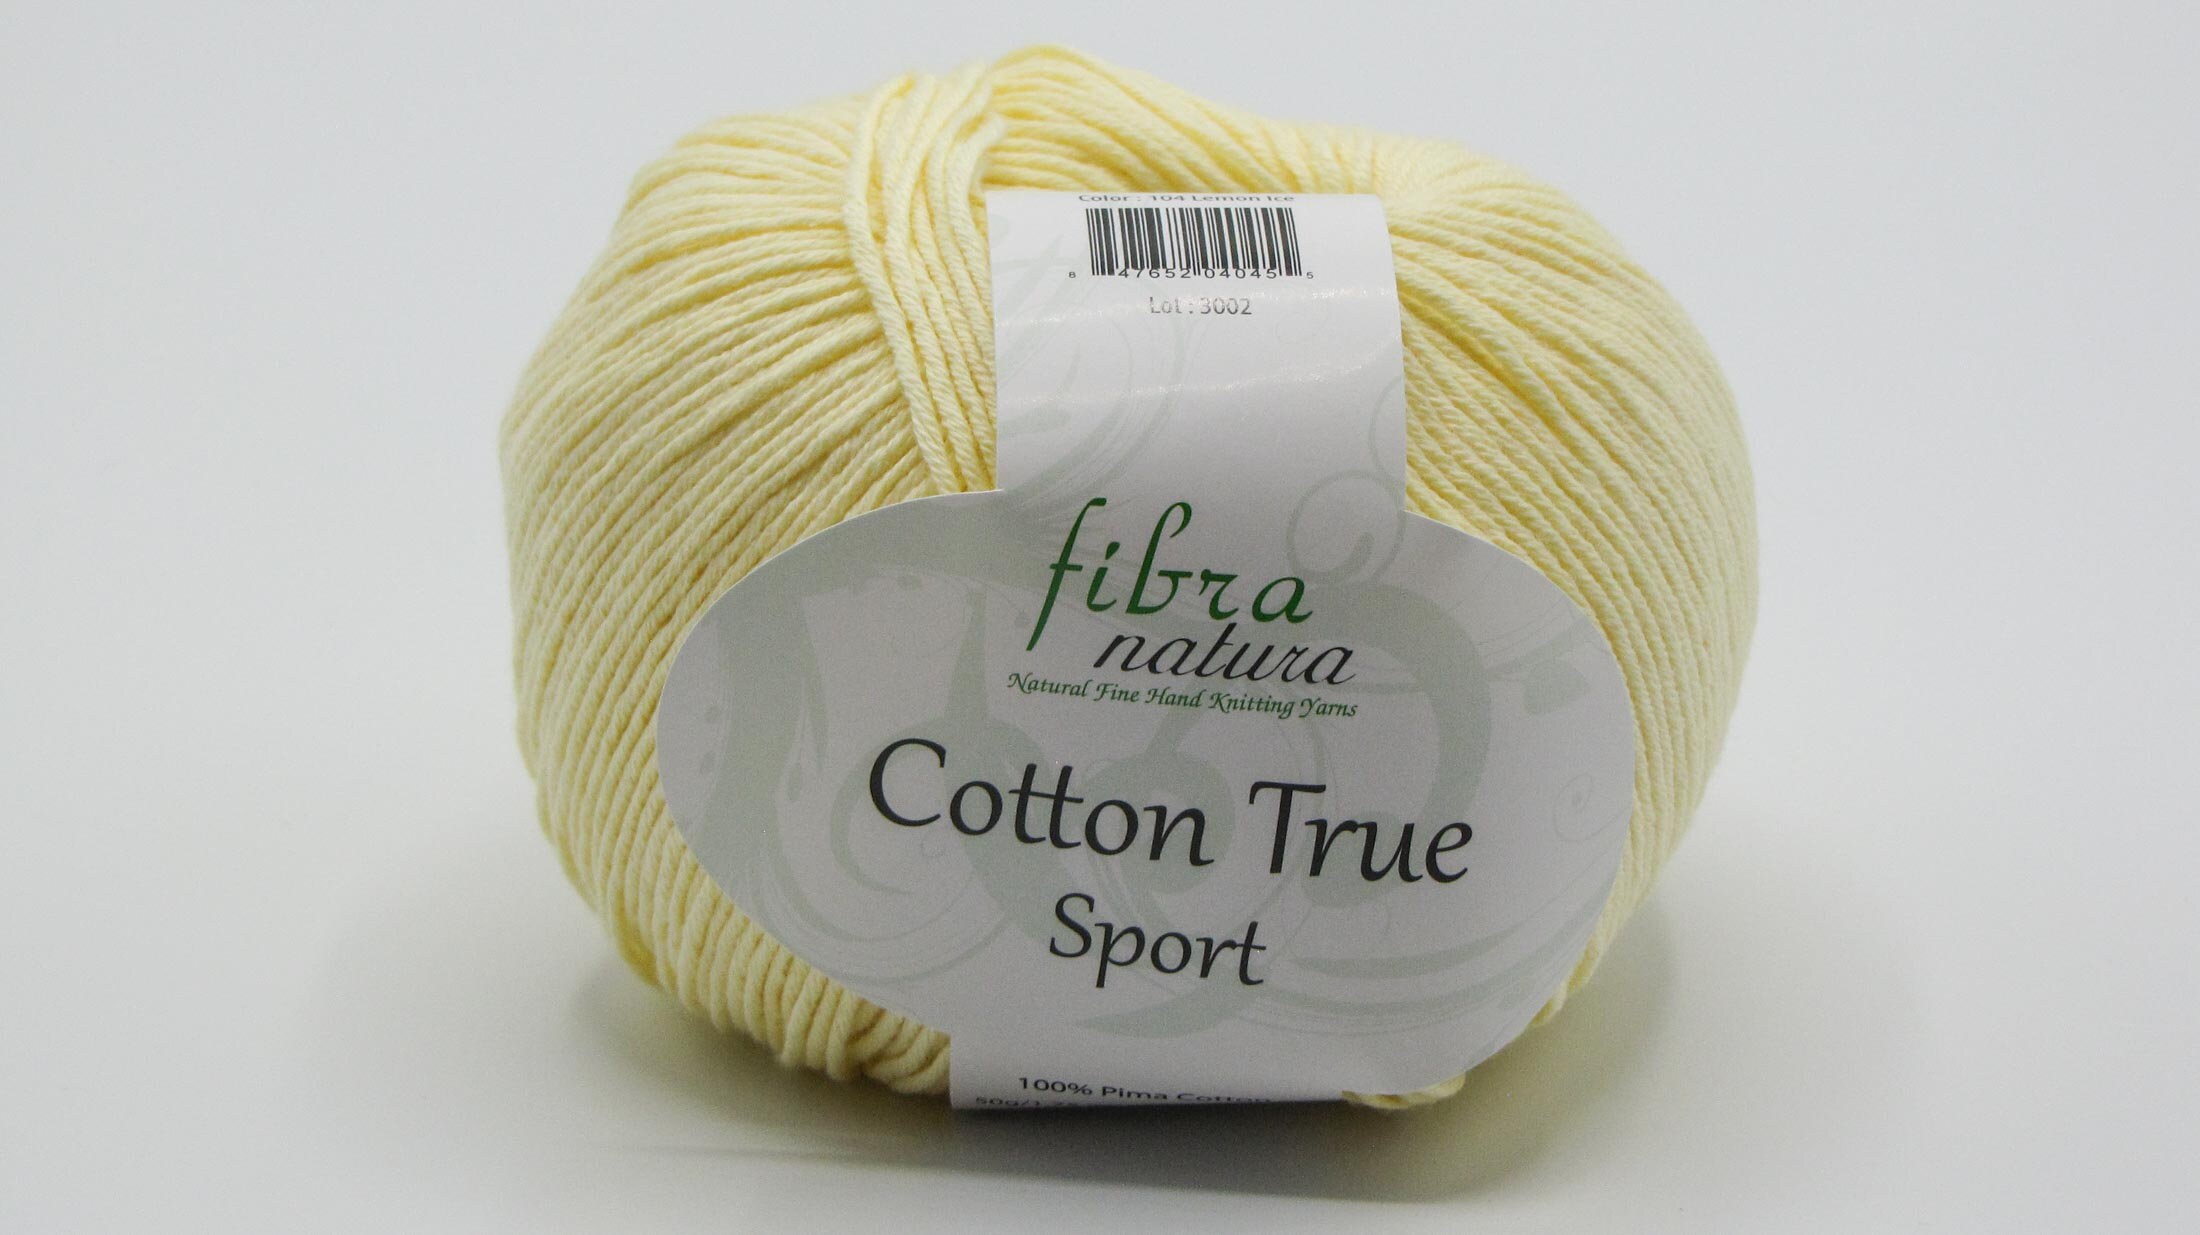 Fibra Natura Cotton True Sport Lemon Ice Color 104 Lot 3002